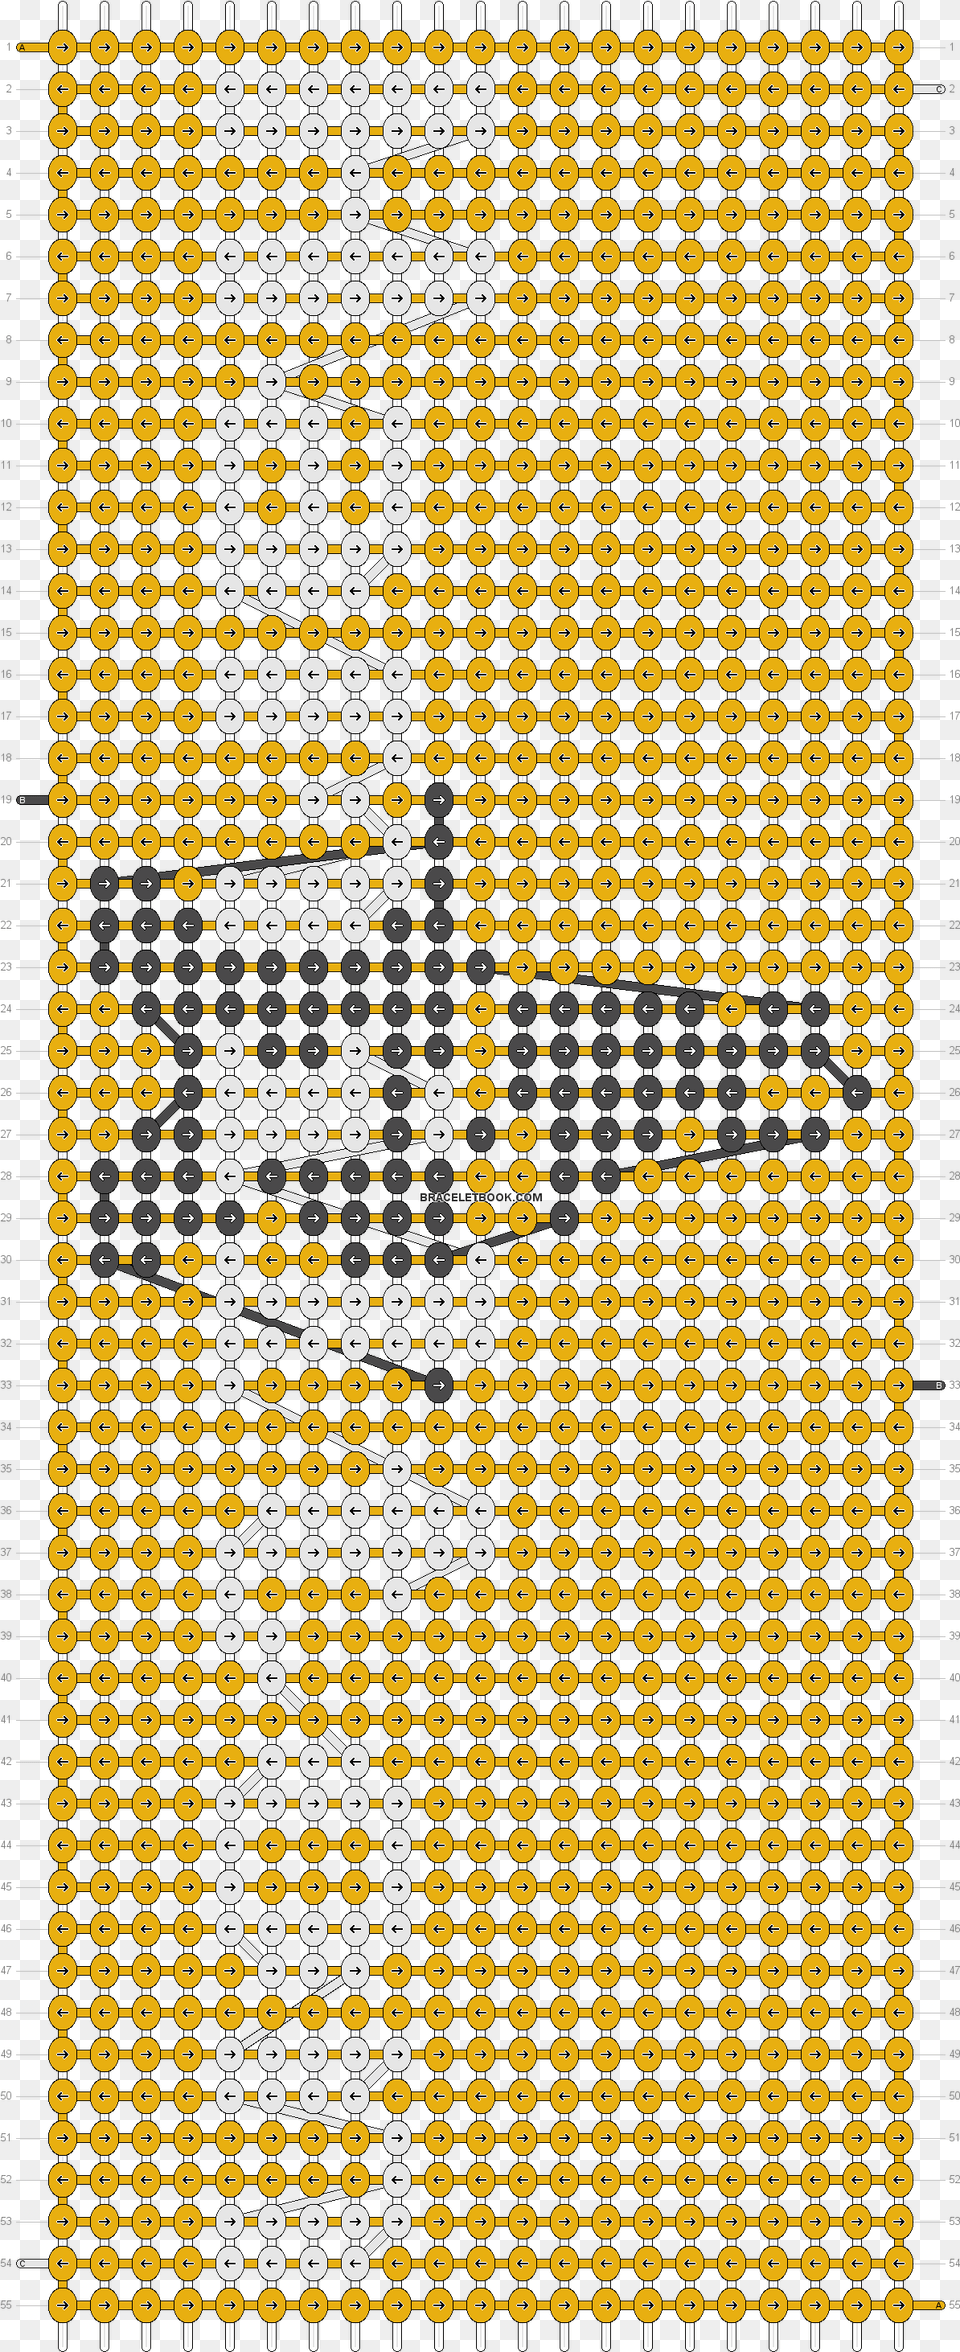 Alpha Pattern Snoopy Friendship Bracelet Pattern, Home Decor, Rug, Gate Free Transparent Png